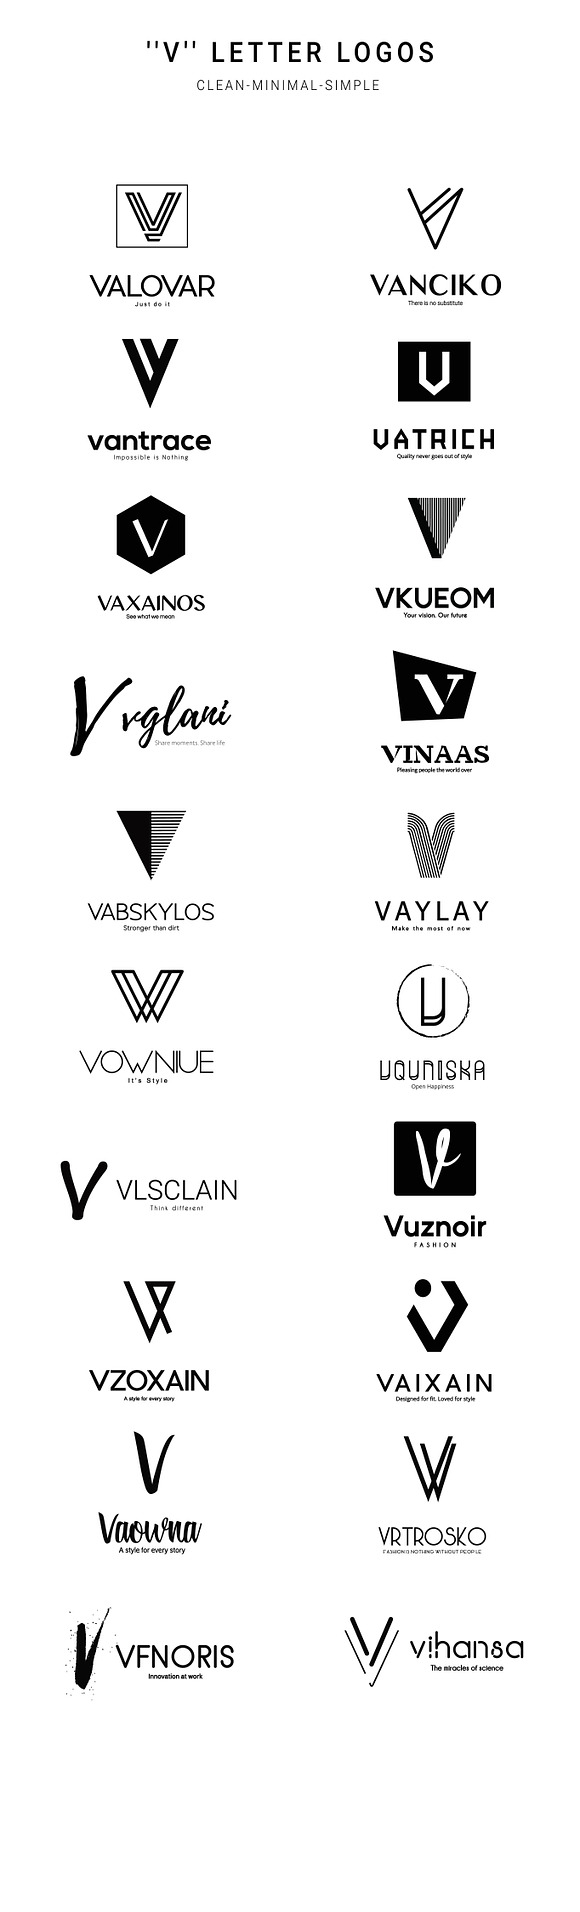 20 V Letter Alphabetic Logos Logo Templates Creative Market